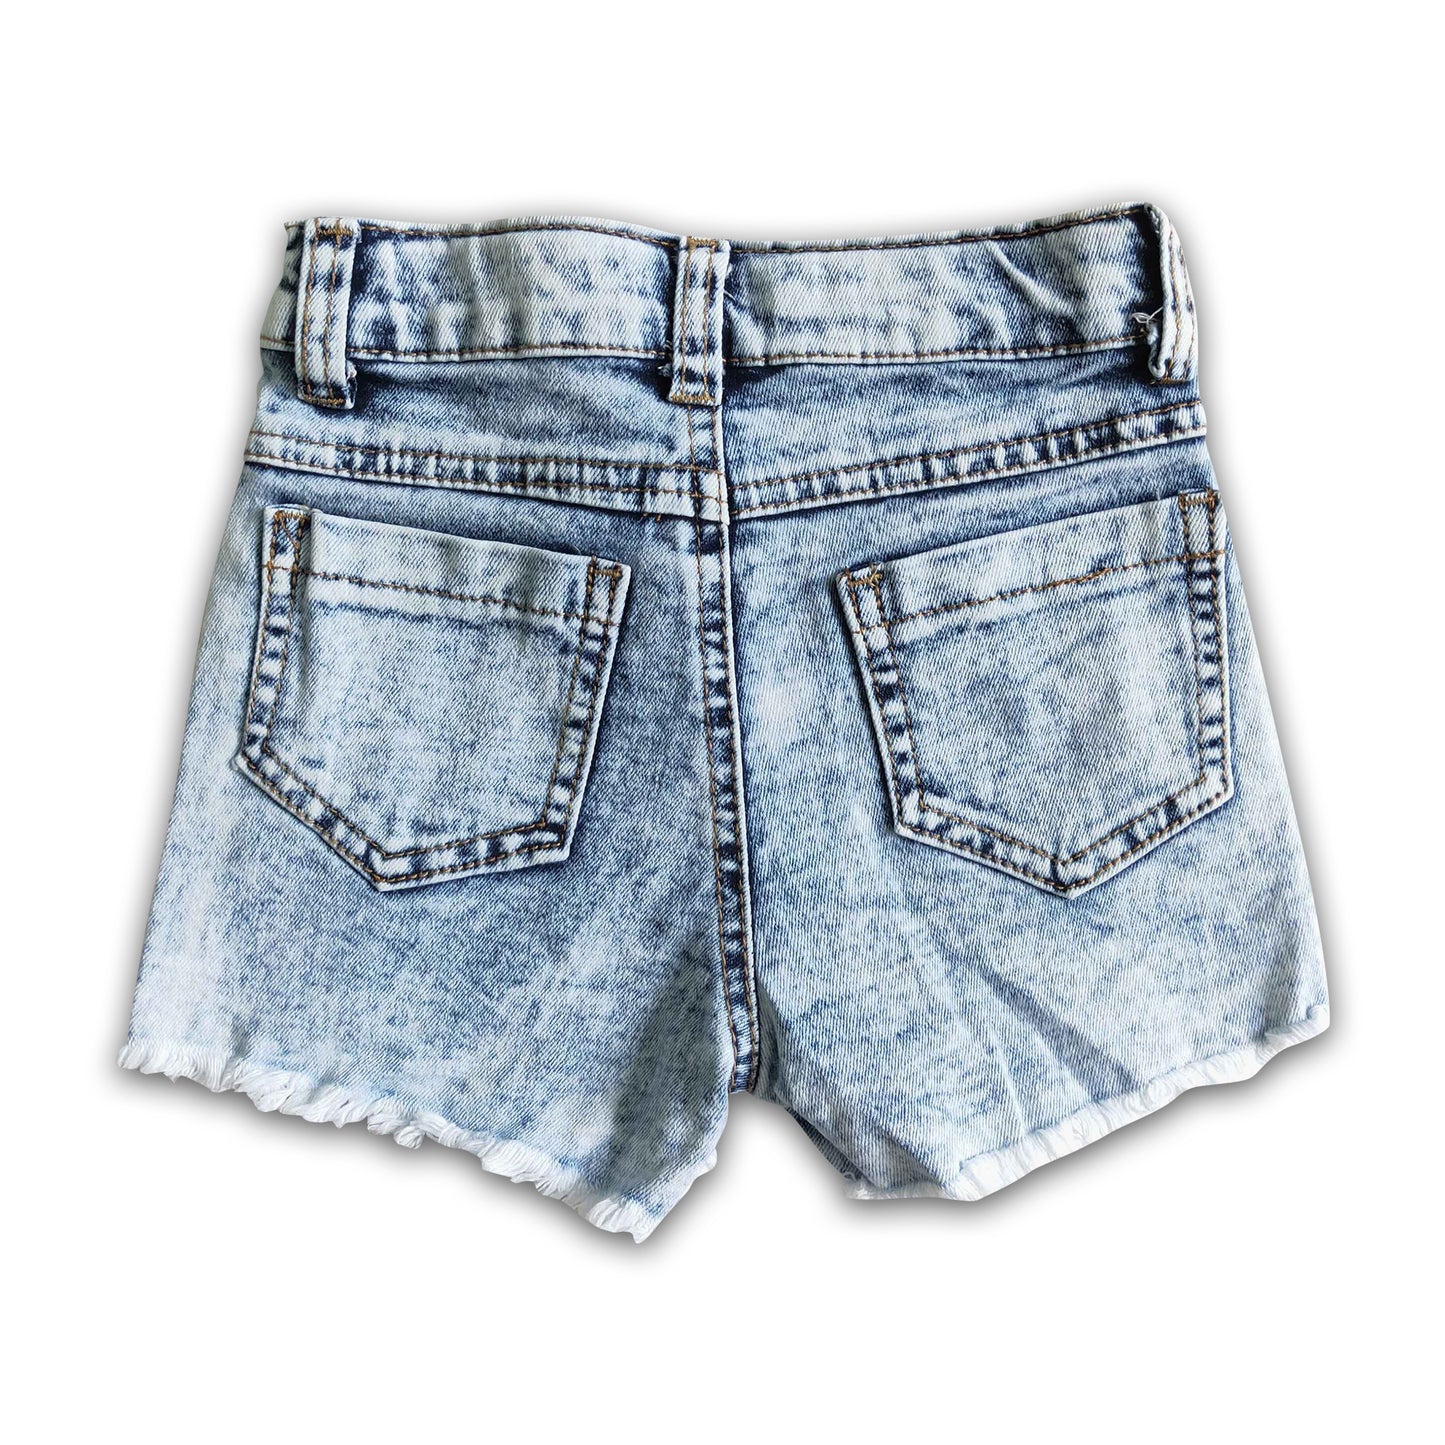 Highland cow denim shorts girls summer jeans